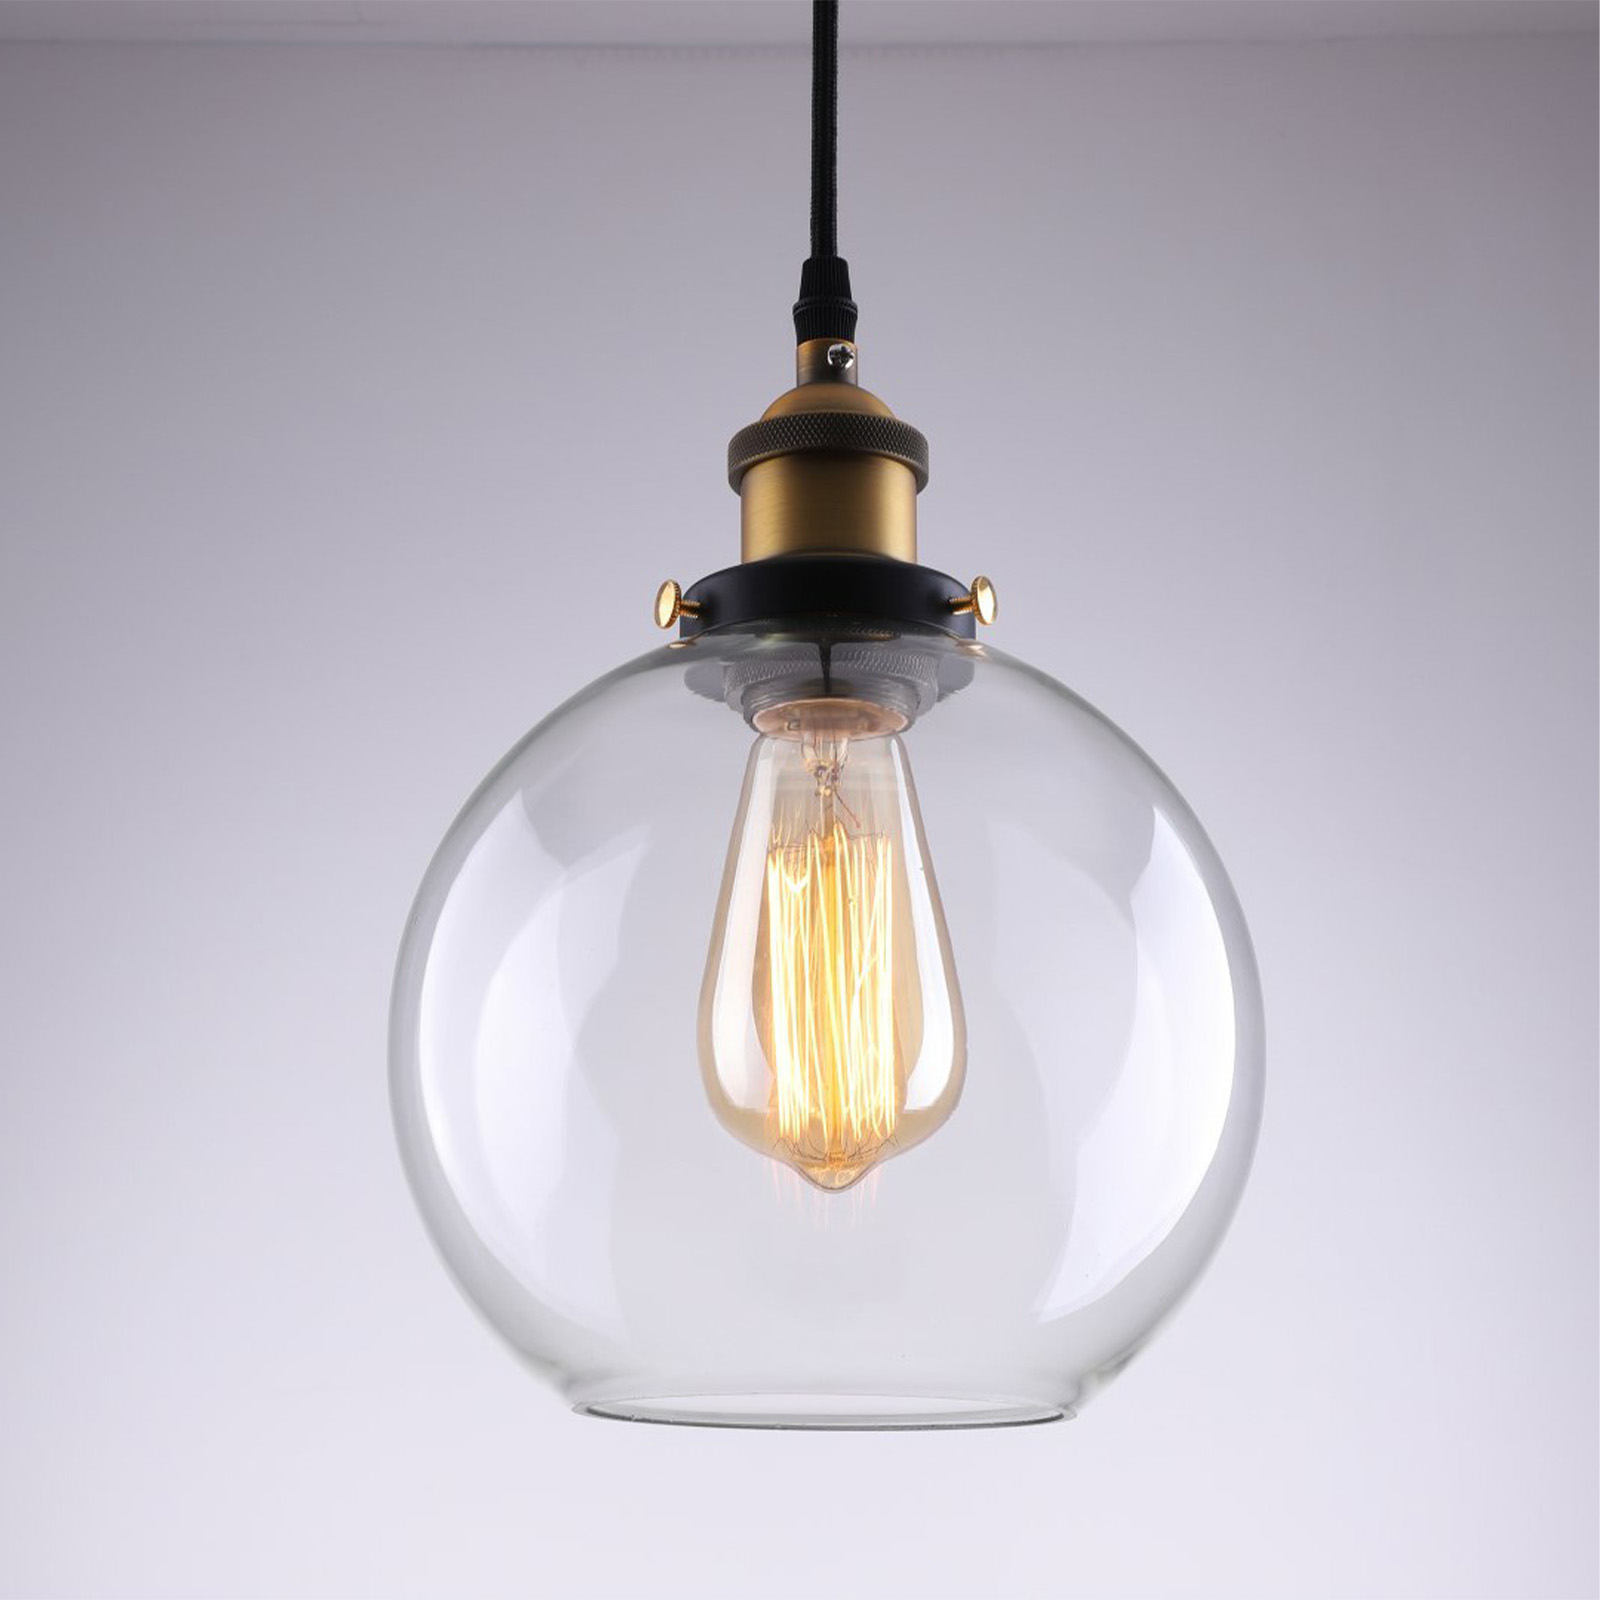 New Modern Vintage Industrial Retro Loft Glass Ceiling Round Shade Pendant Light